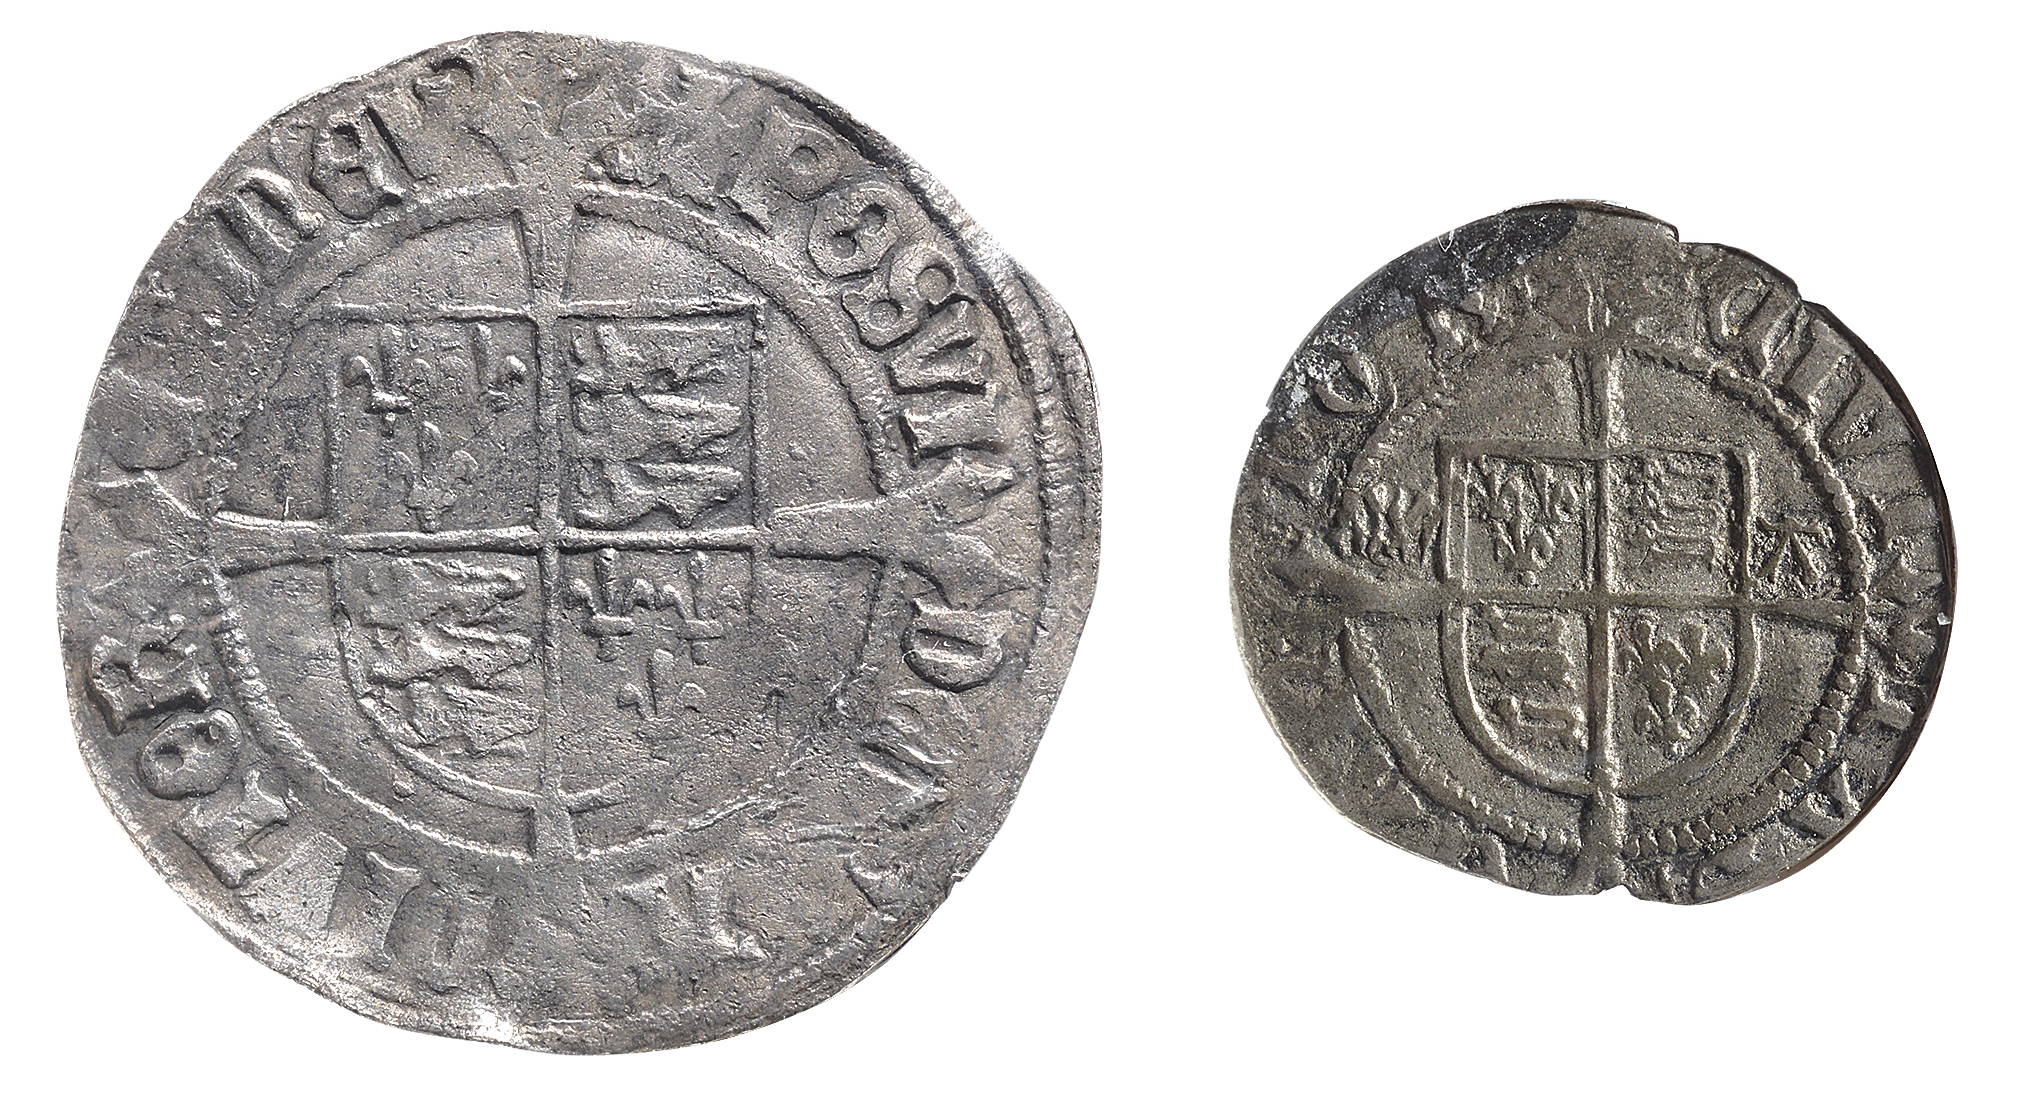 Henry VIII (1509-1547) silver groat and half groatfirst London, mint mark castle, HENRIC VIII DI GR? - Image 2 of 2